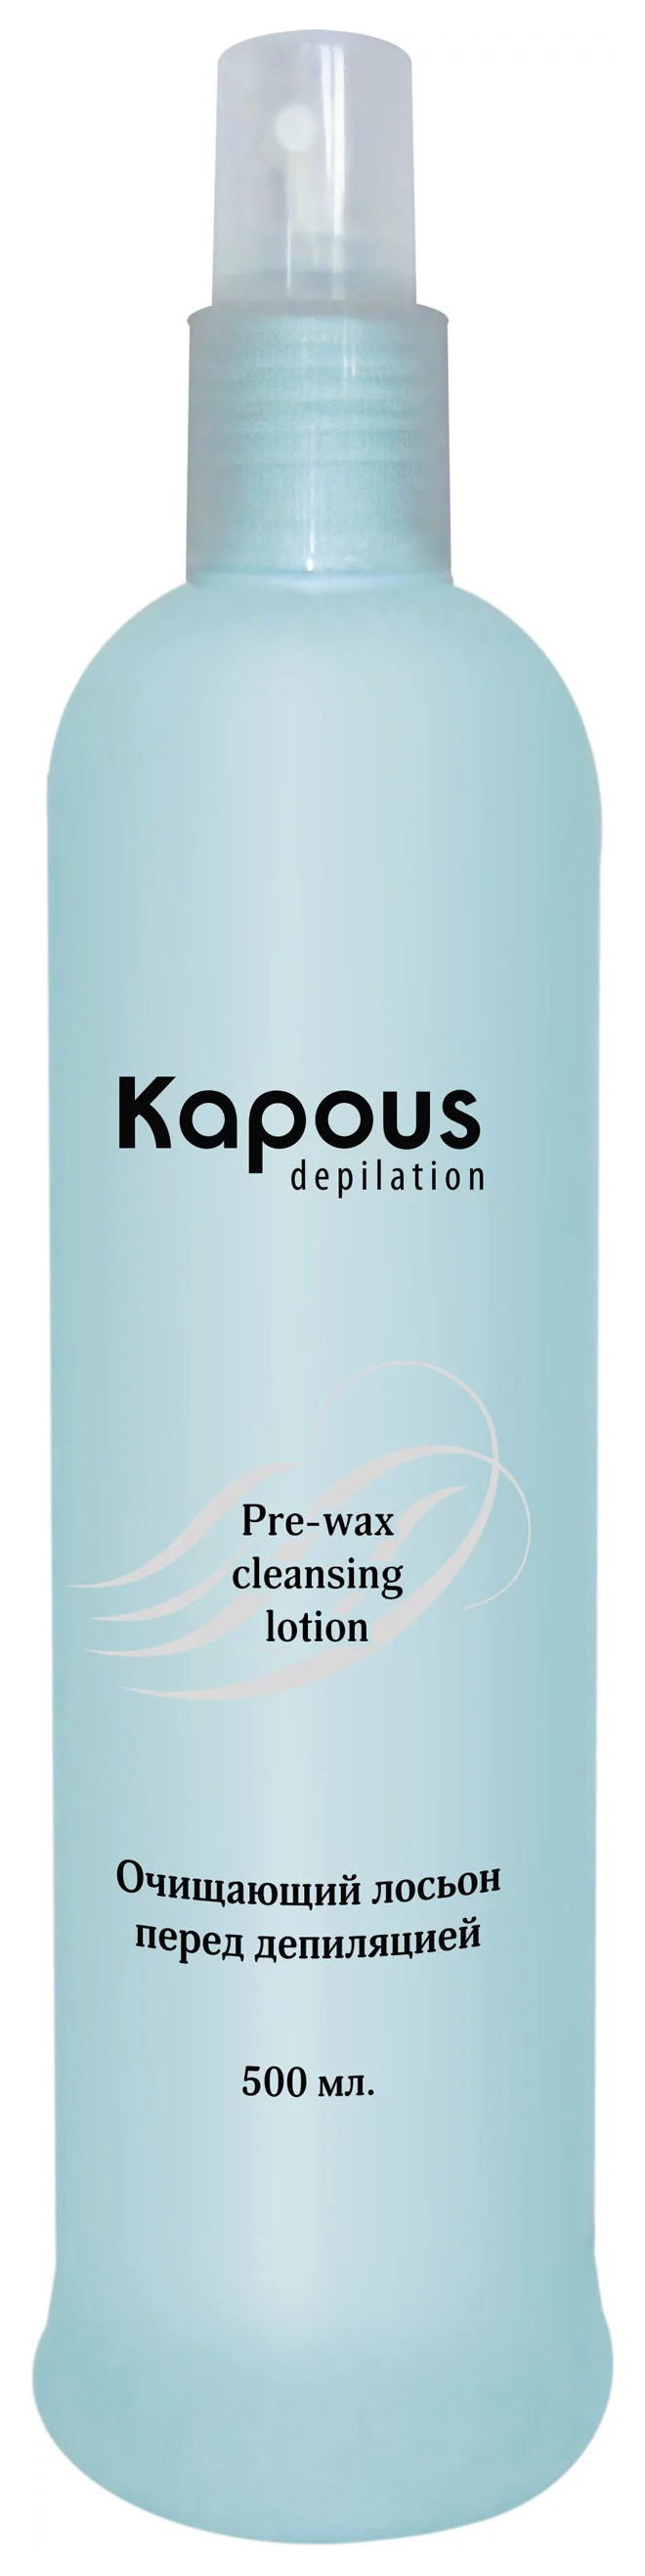 Очищающий лосьон перед депиляцией Kapous Professional 500 мл очищающий лосьон перед депиляцией